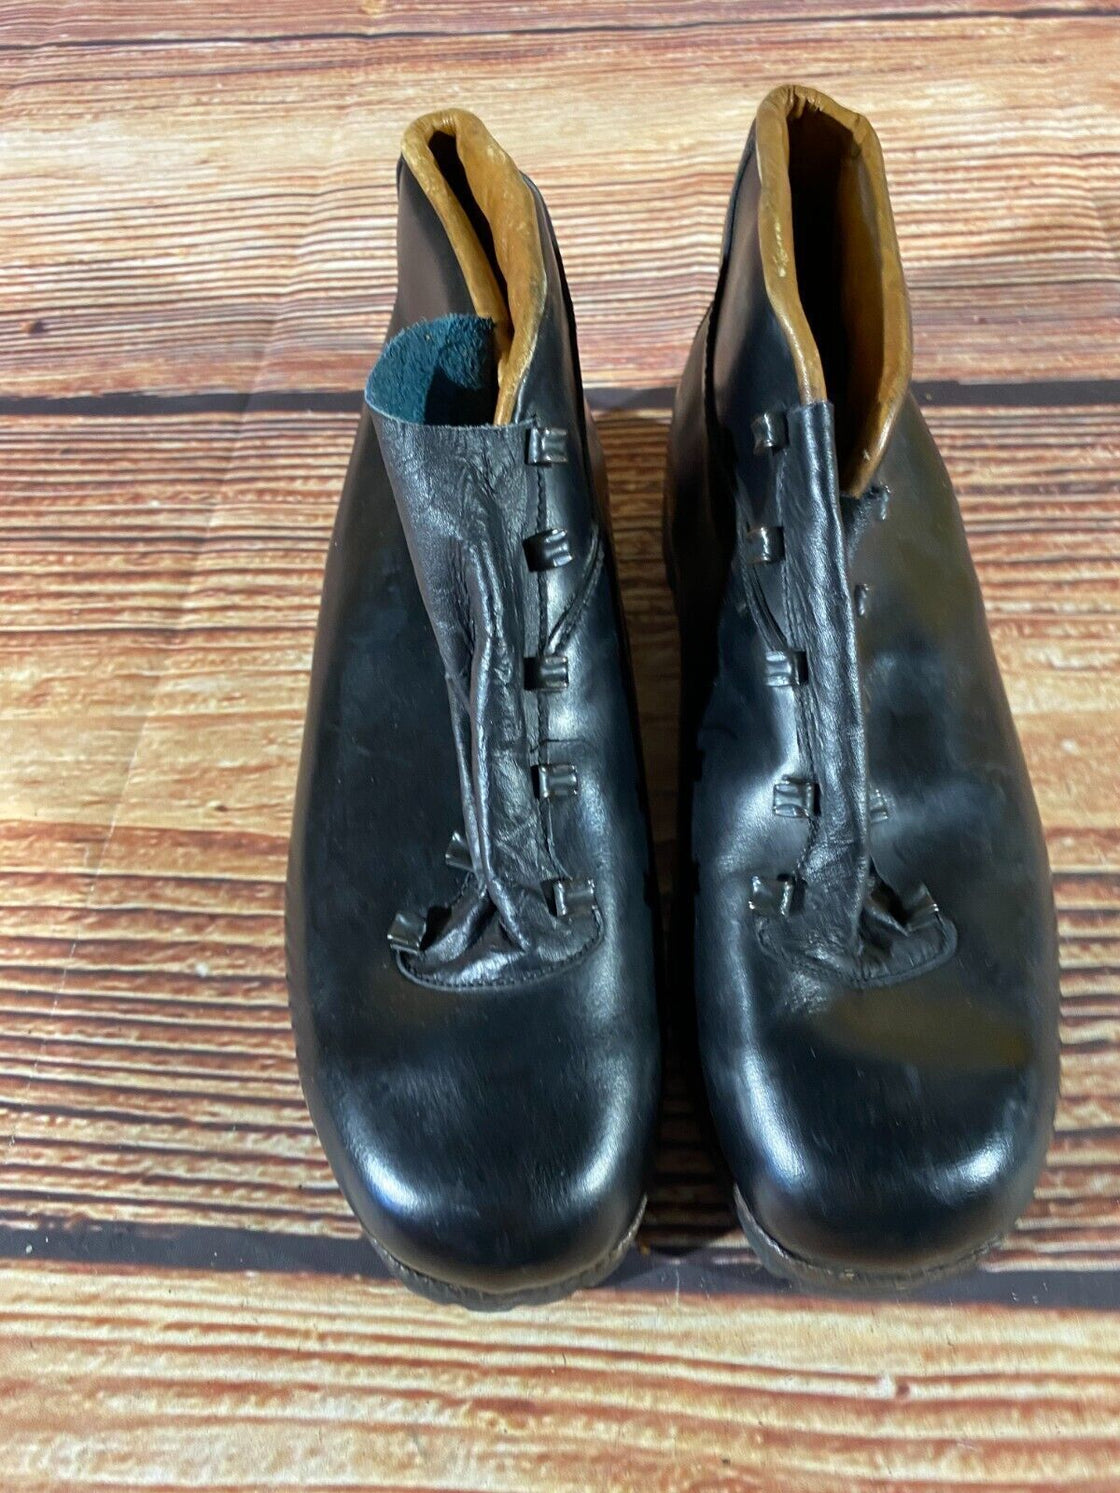 ADAMELLO Hiking Boots Trekking Trails Leather Shoes Unisex Size EU42, US8.5, UK8